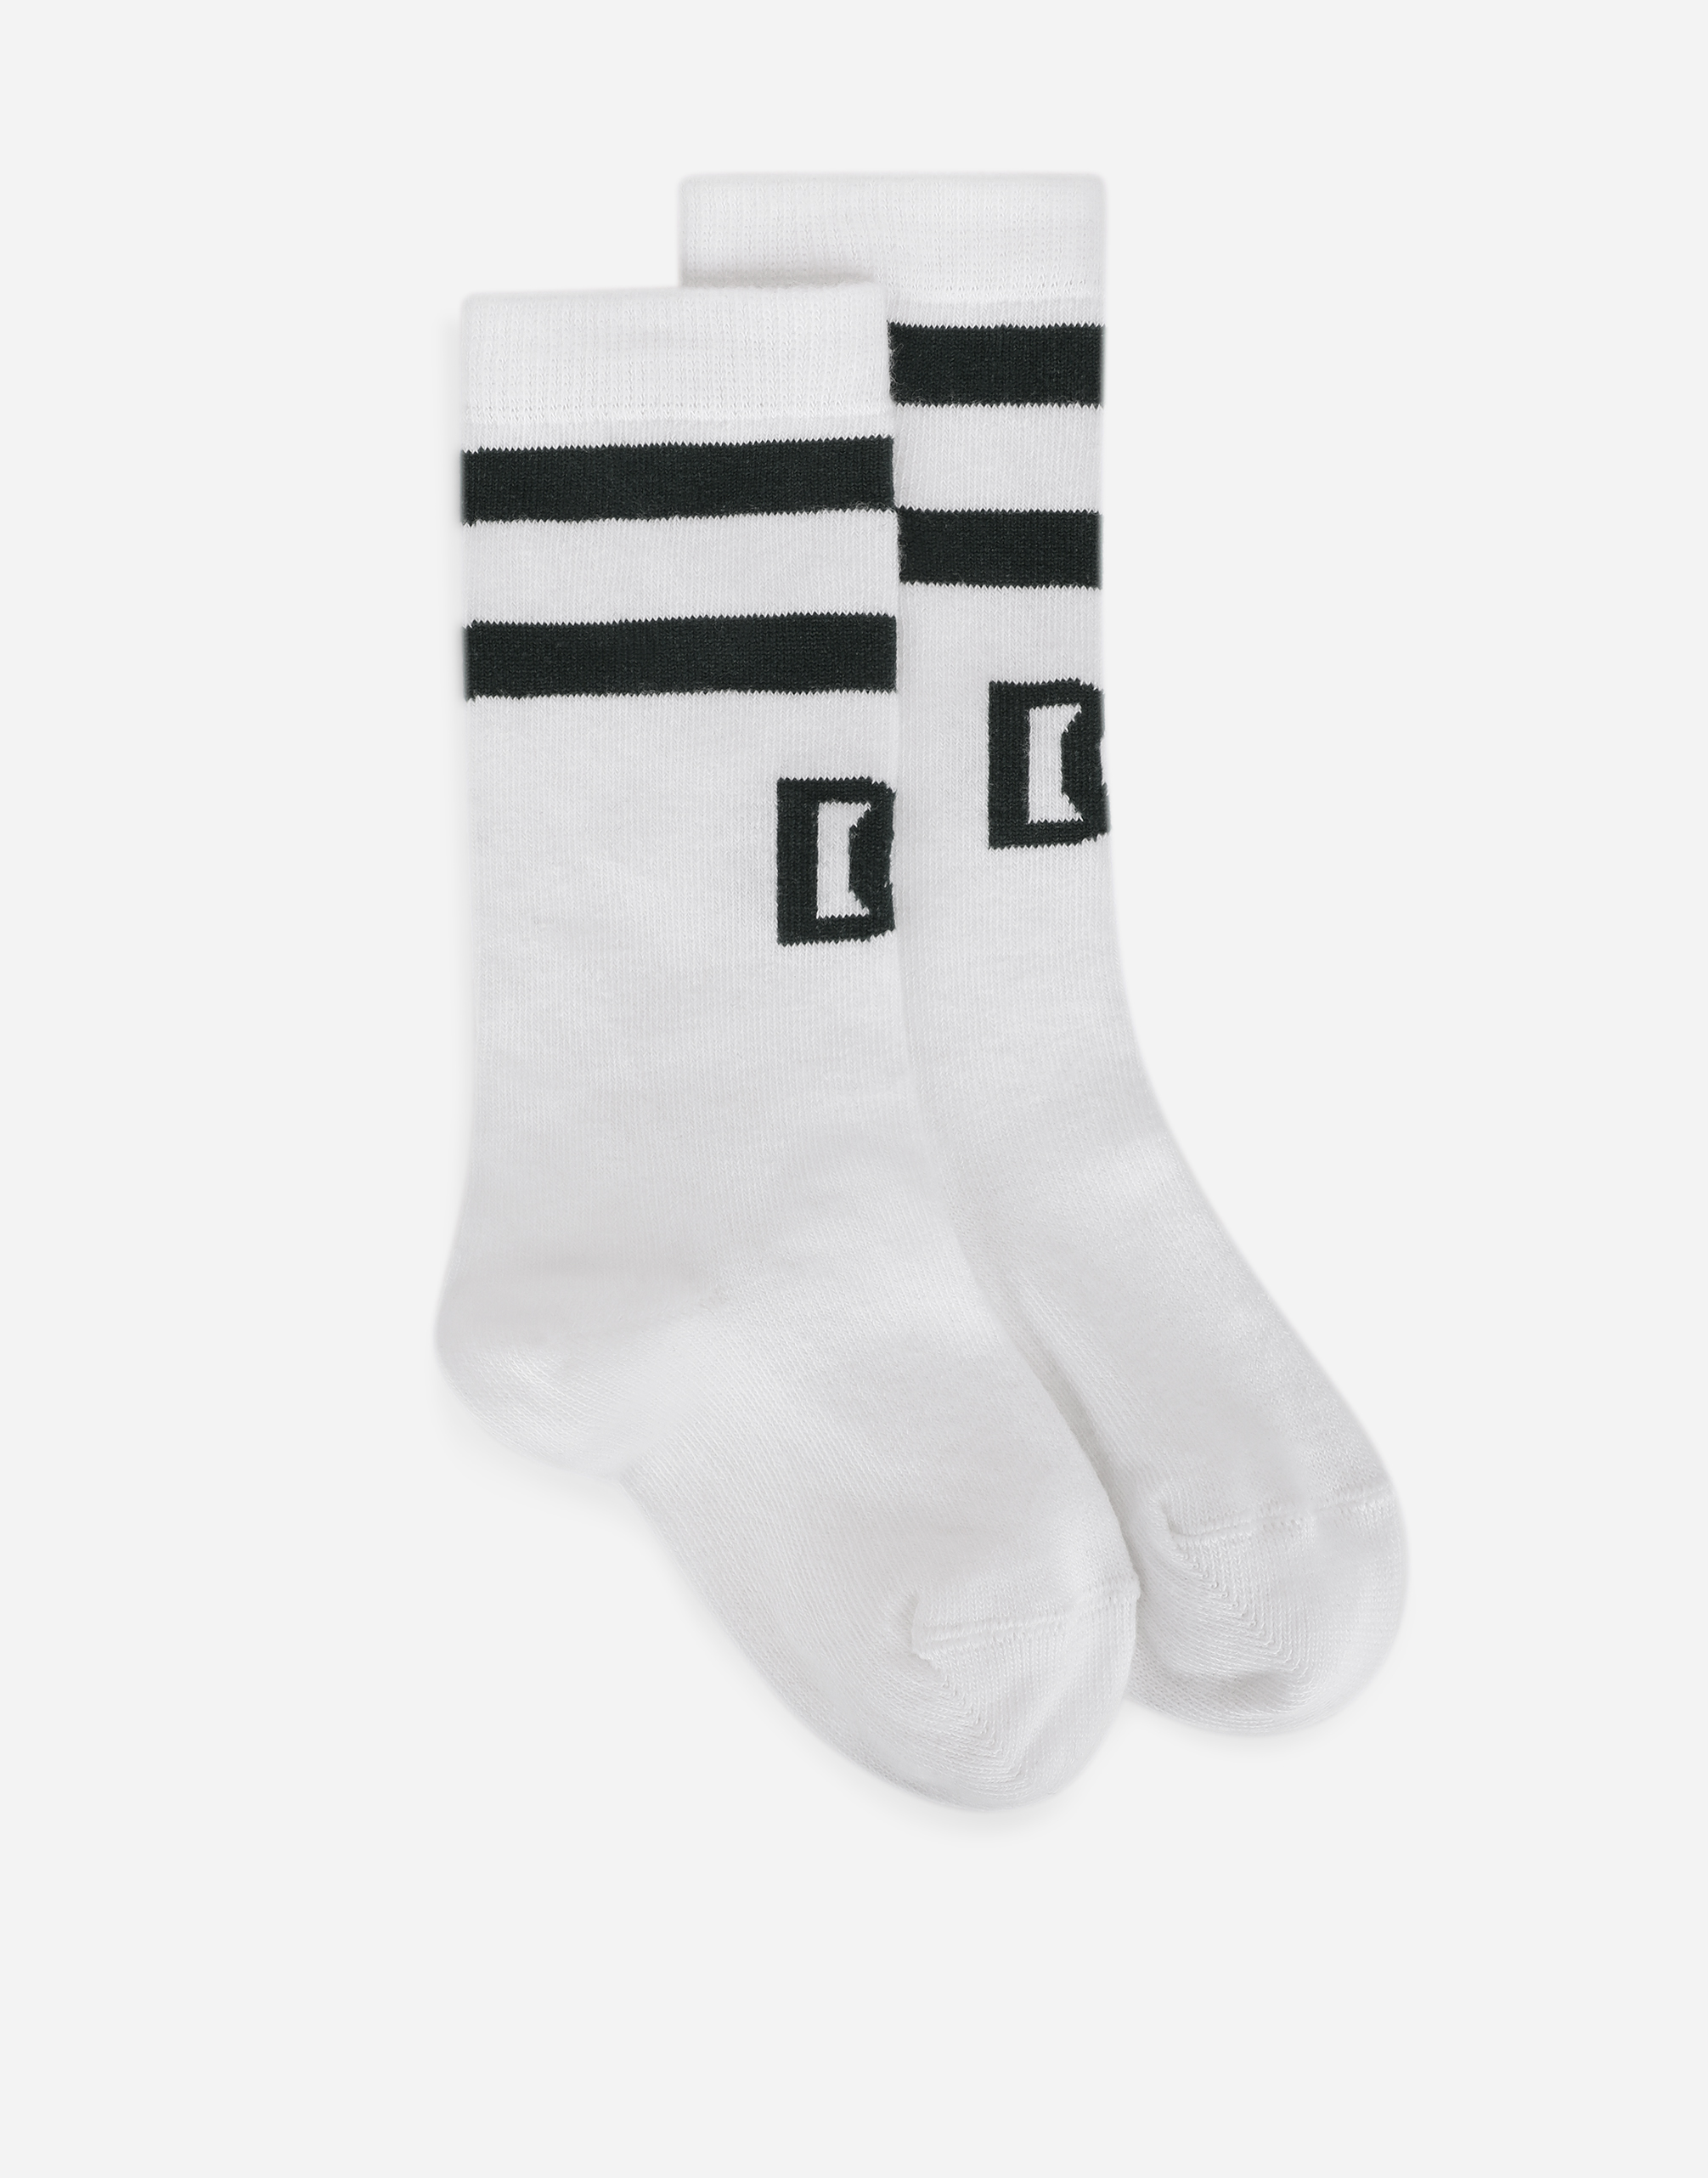 Cotton socks with jacquard DG logo in Multicolor